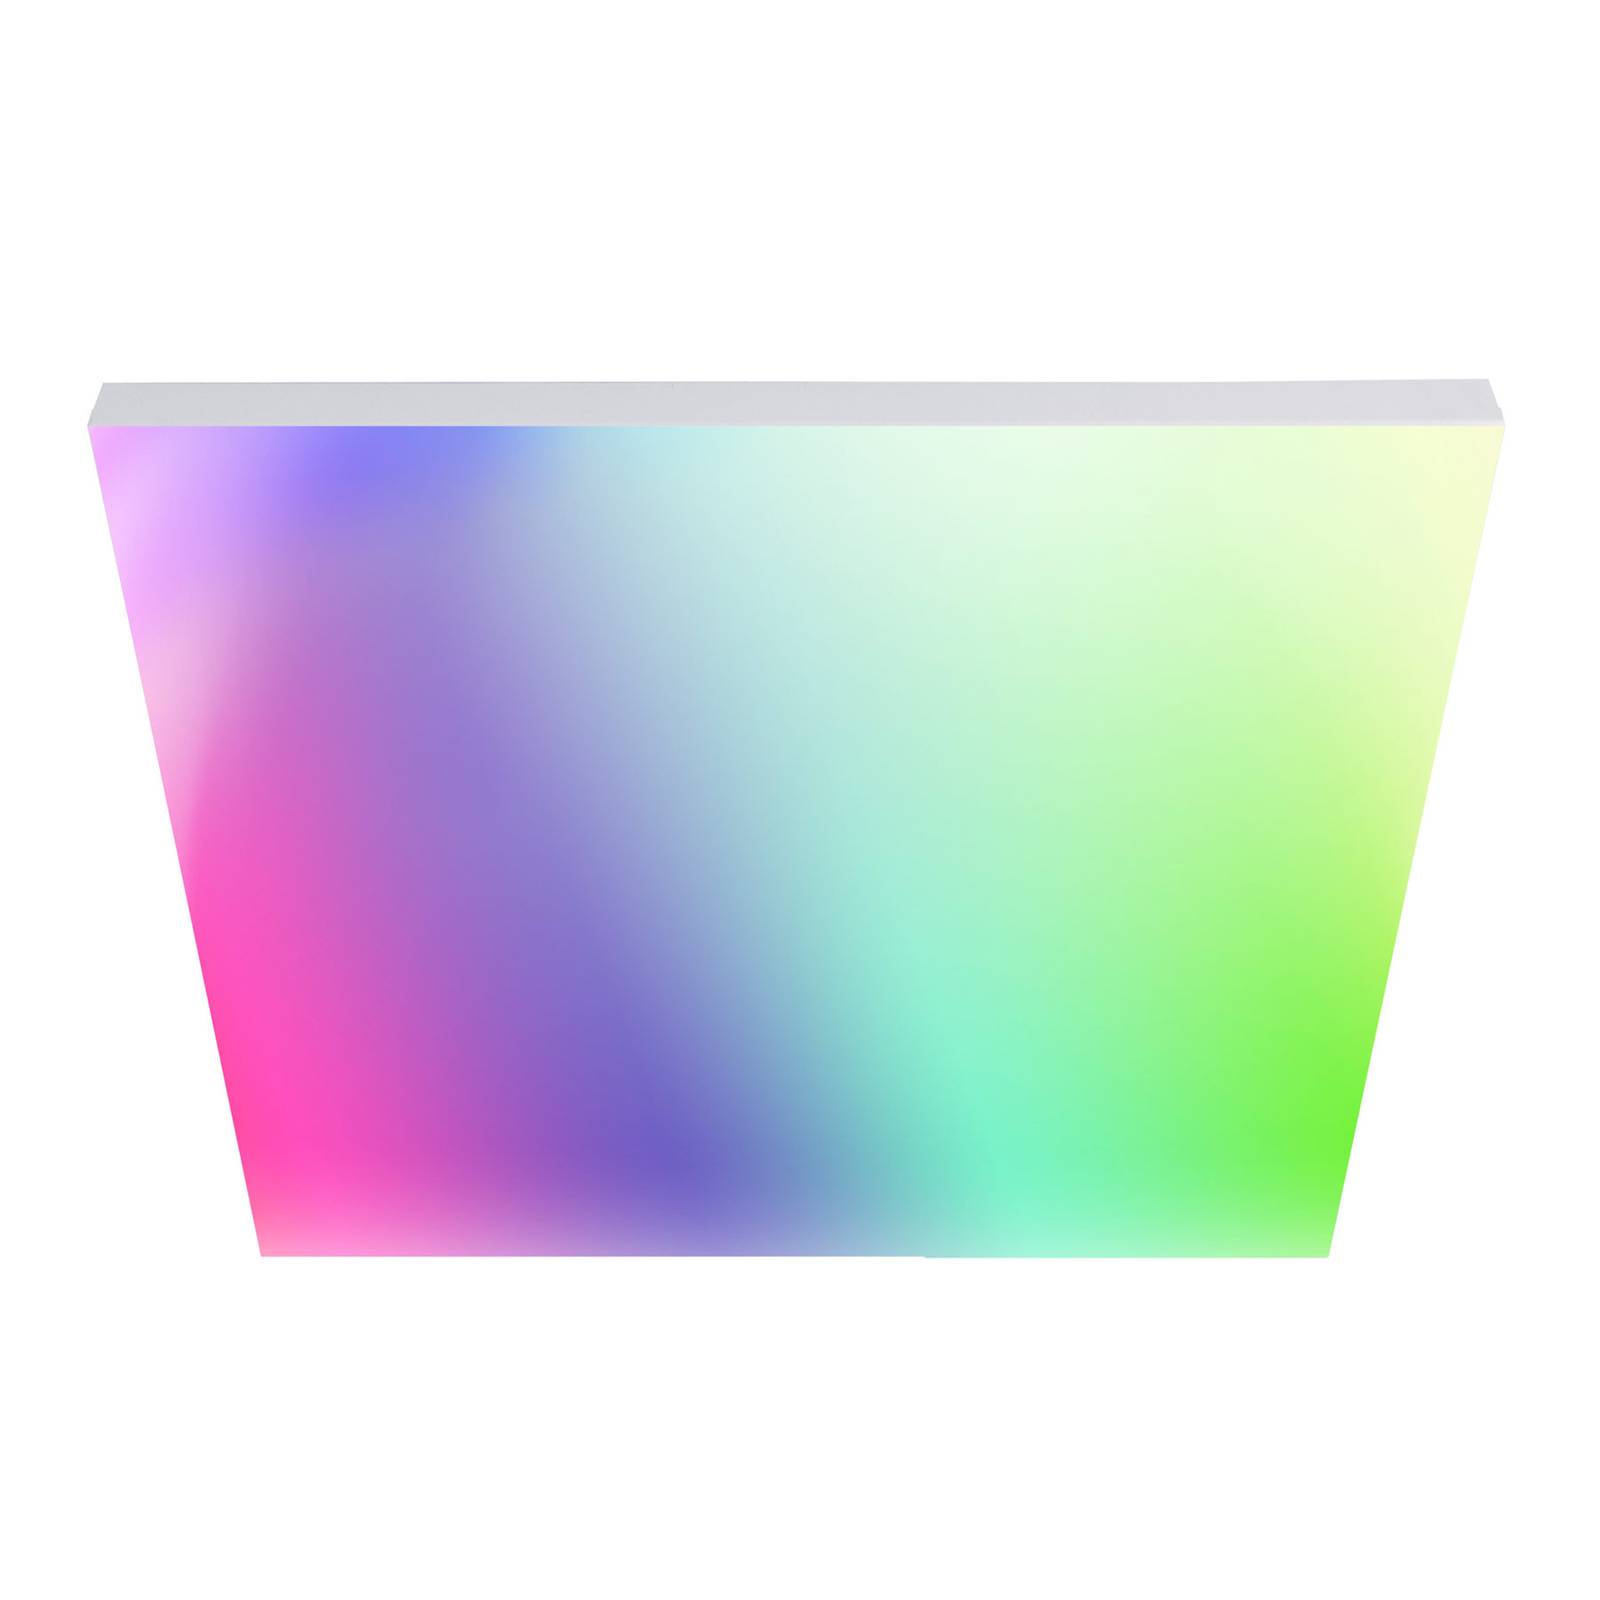 Müller Licht tint LED-Panel Loris, 45x45cm